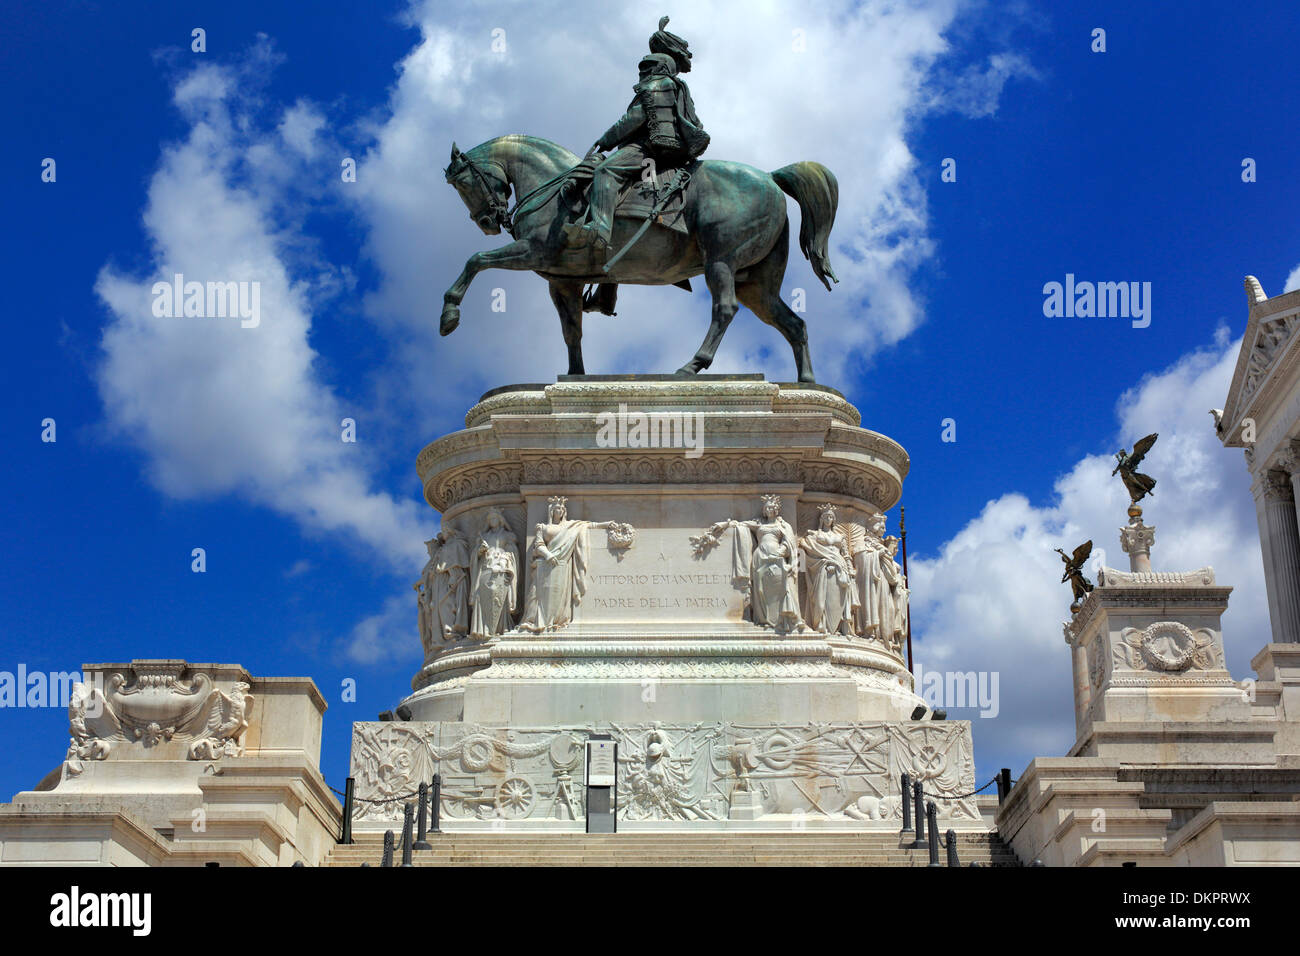 La sculpture équestre de Victor Emmanuel II, l'autel de la patrie, de la Piazza Venezia, Rome, Italie Banque D'Images